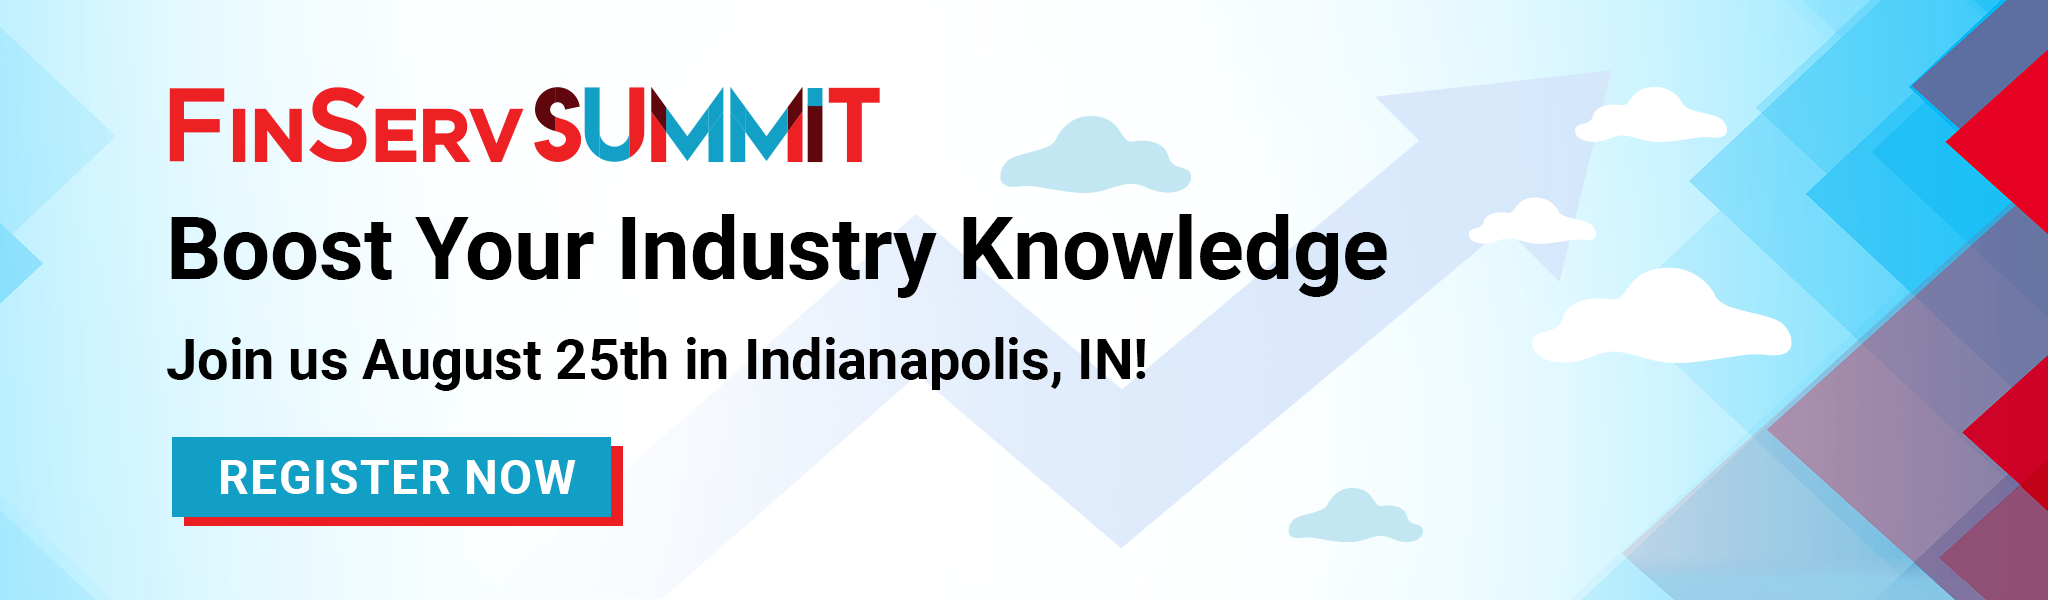 FinServ Summit - Indianapolis, IN